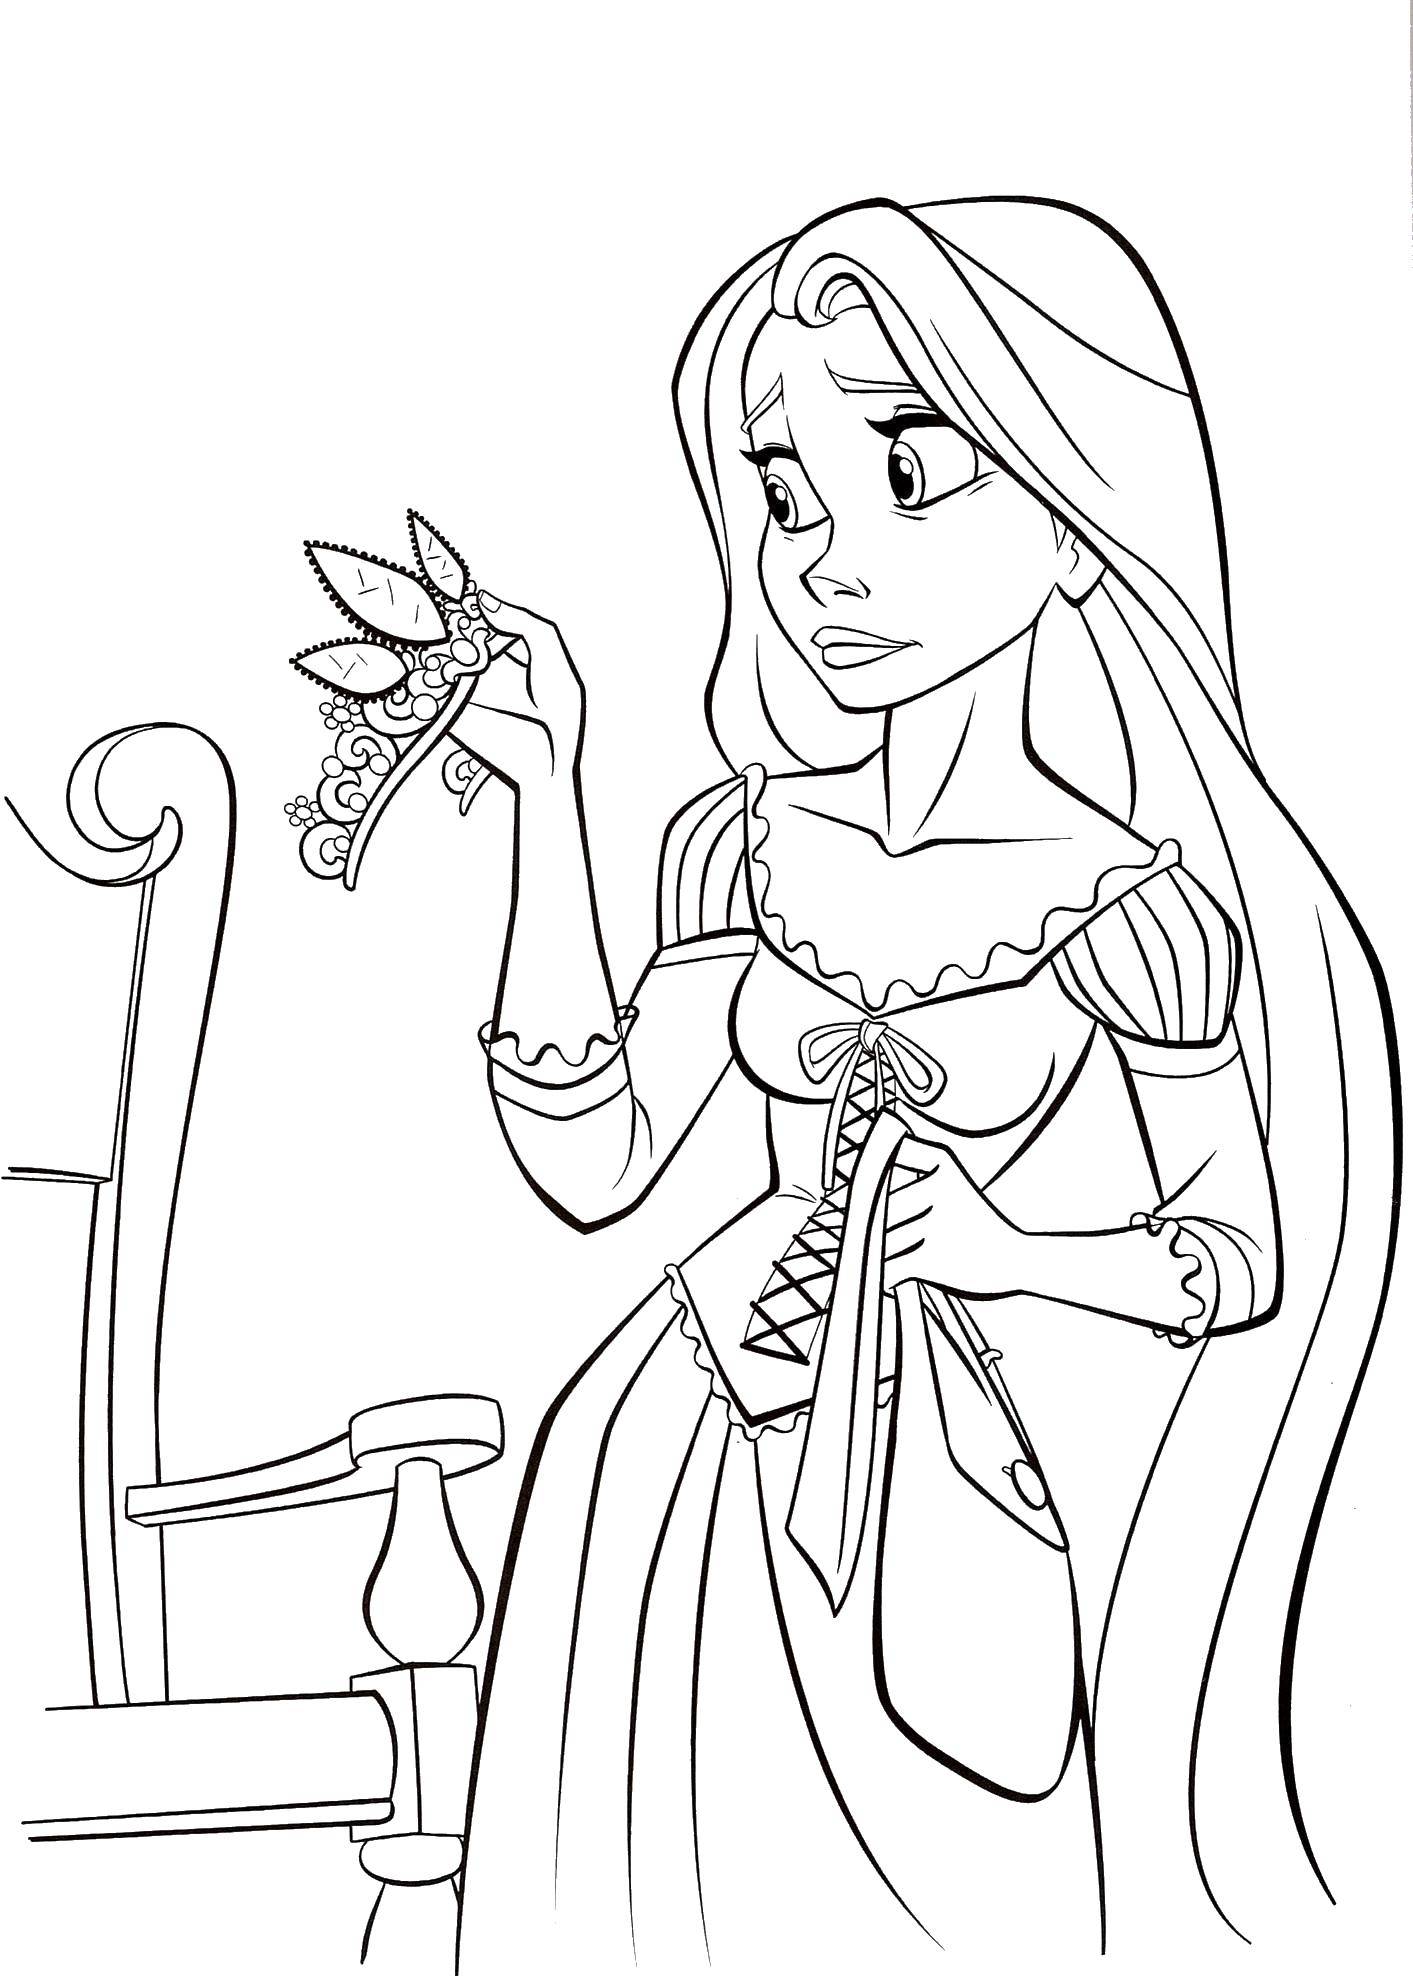 Coloring Tiara Rapunzel. Category coloring. Tags:  Disney, Rapunzel.